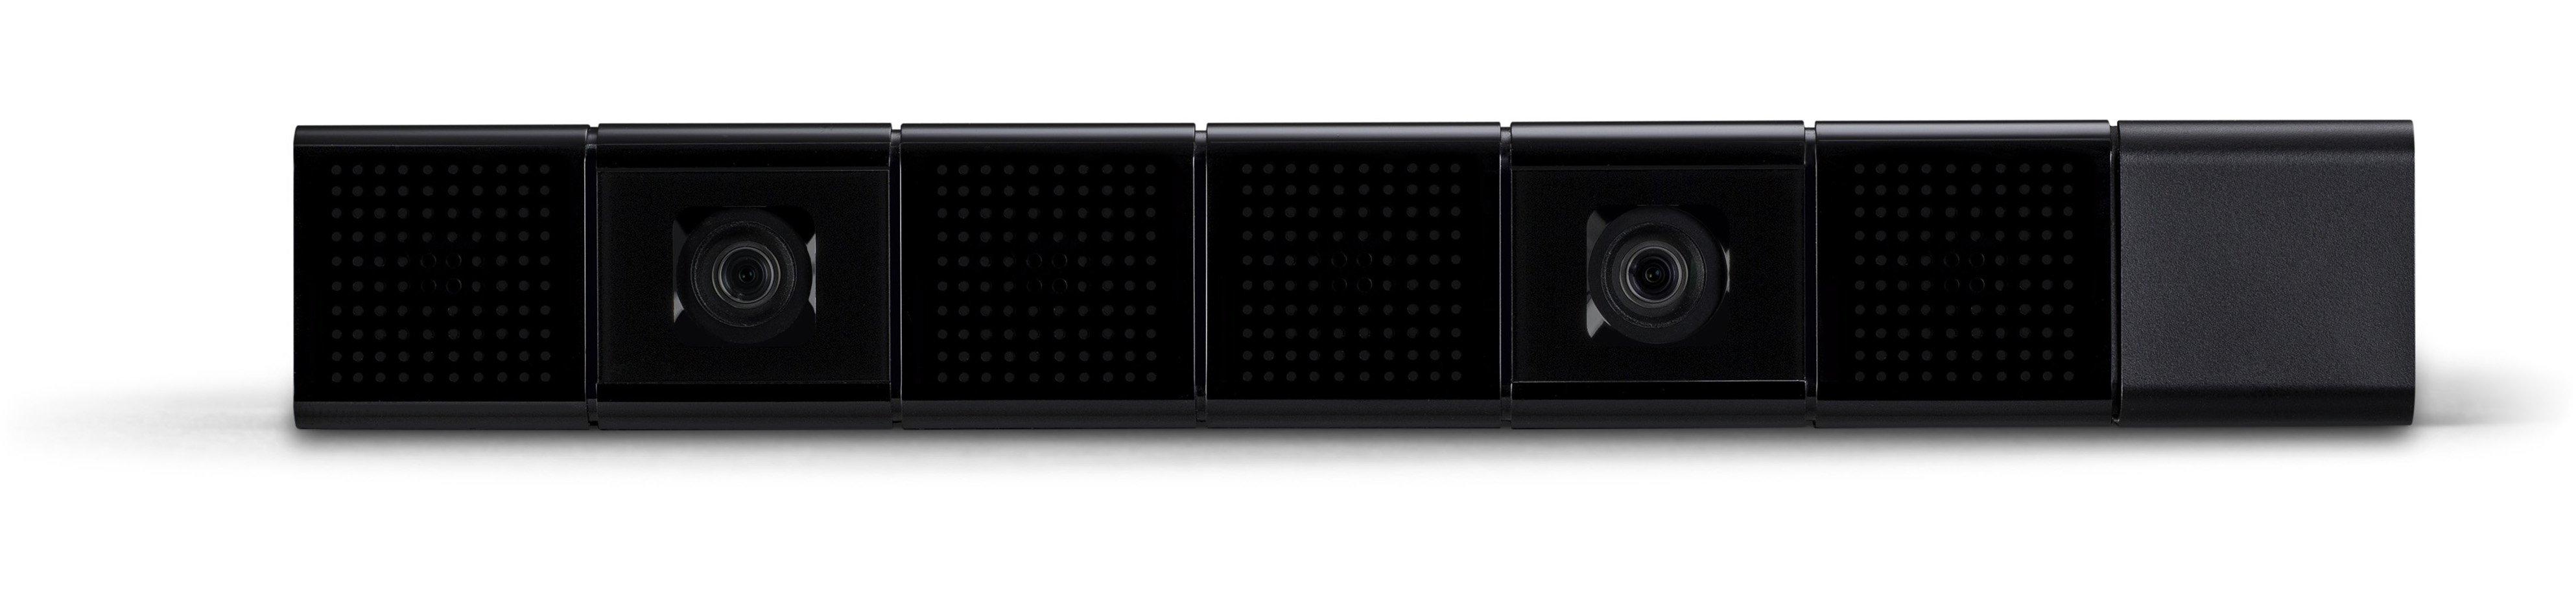 Sony PlayStation Camera for PlayStation 4 (Previous Model) | GameStop